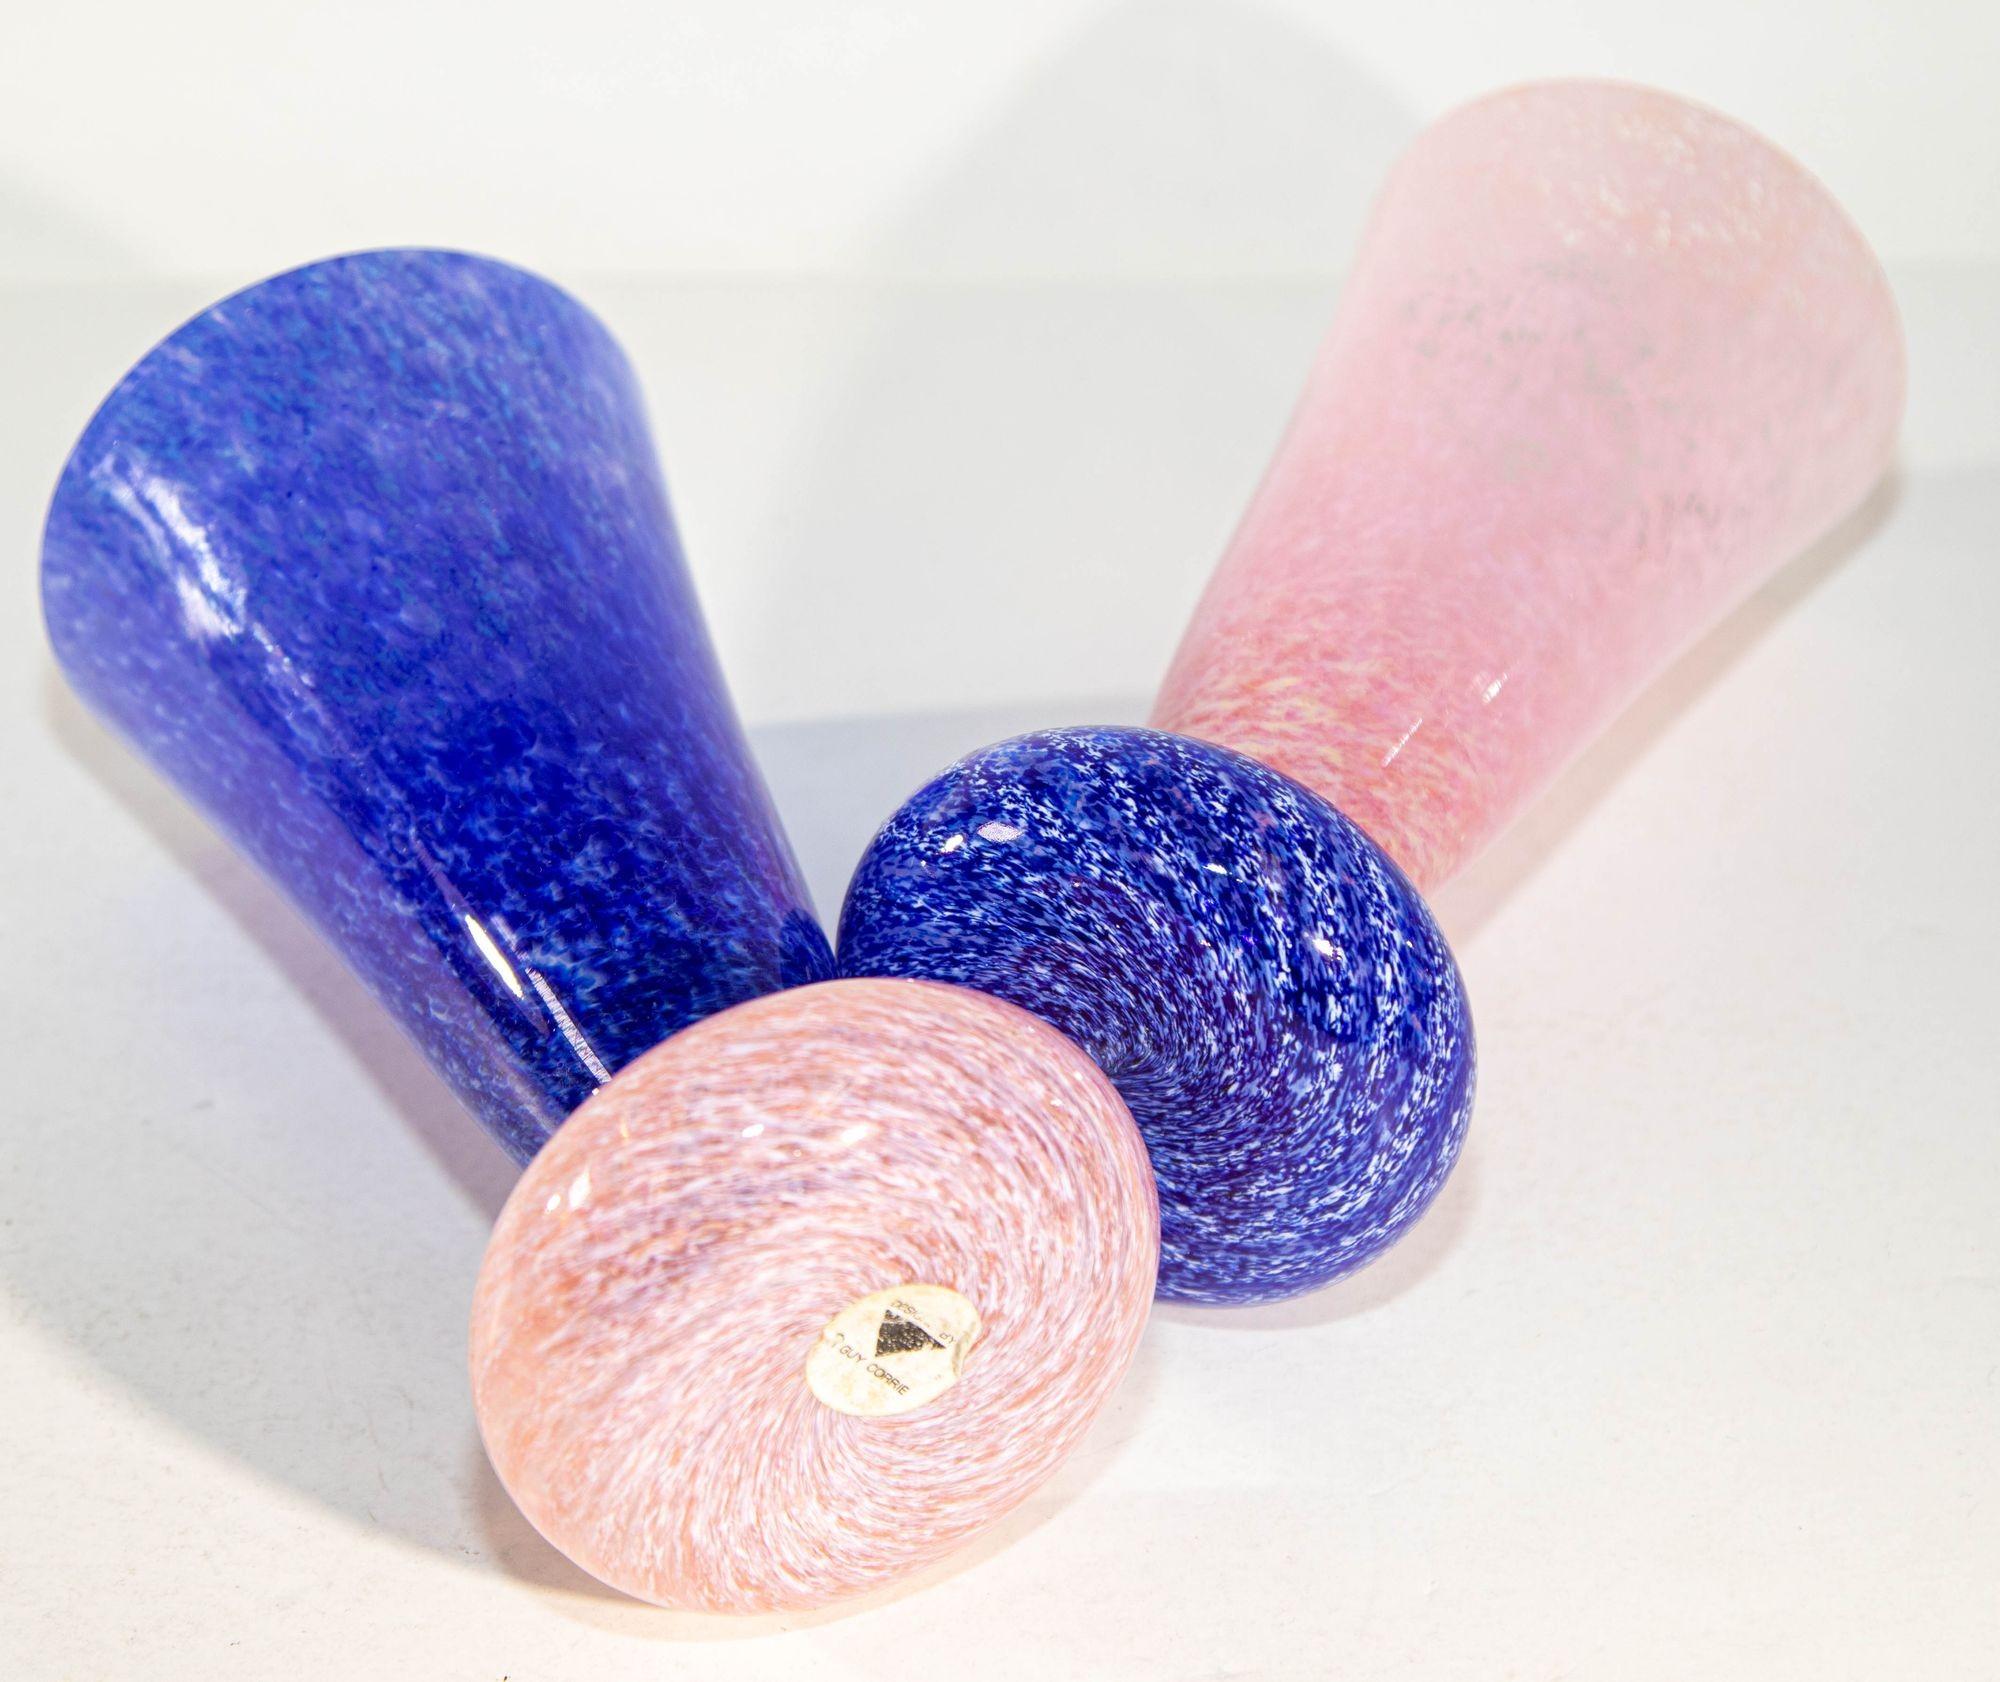 Guy Corrie Union Glass Donut Base Art Glass Vases Cobalt Blue Pink 1980s Set For Sale 1